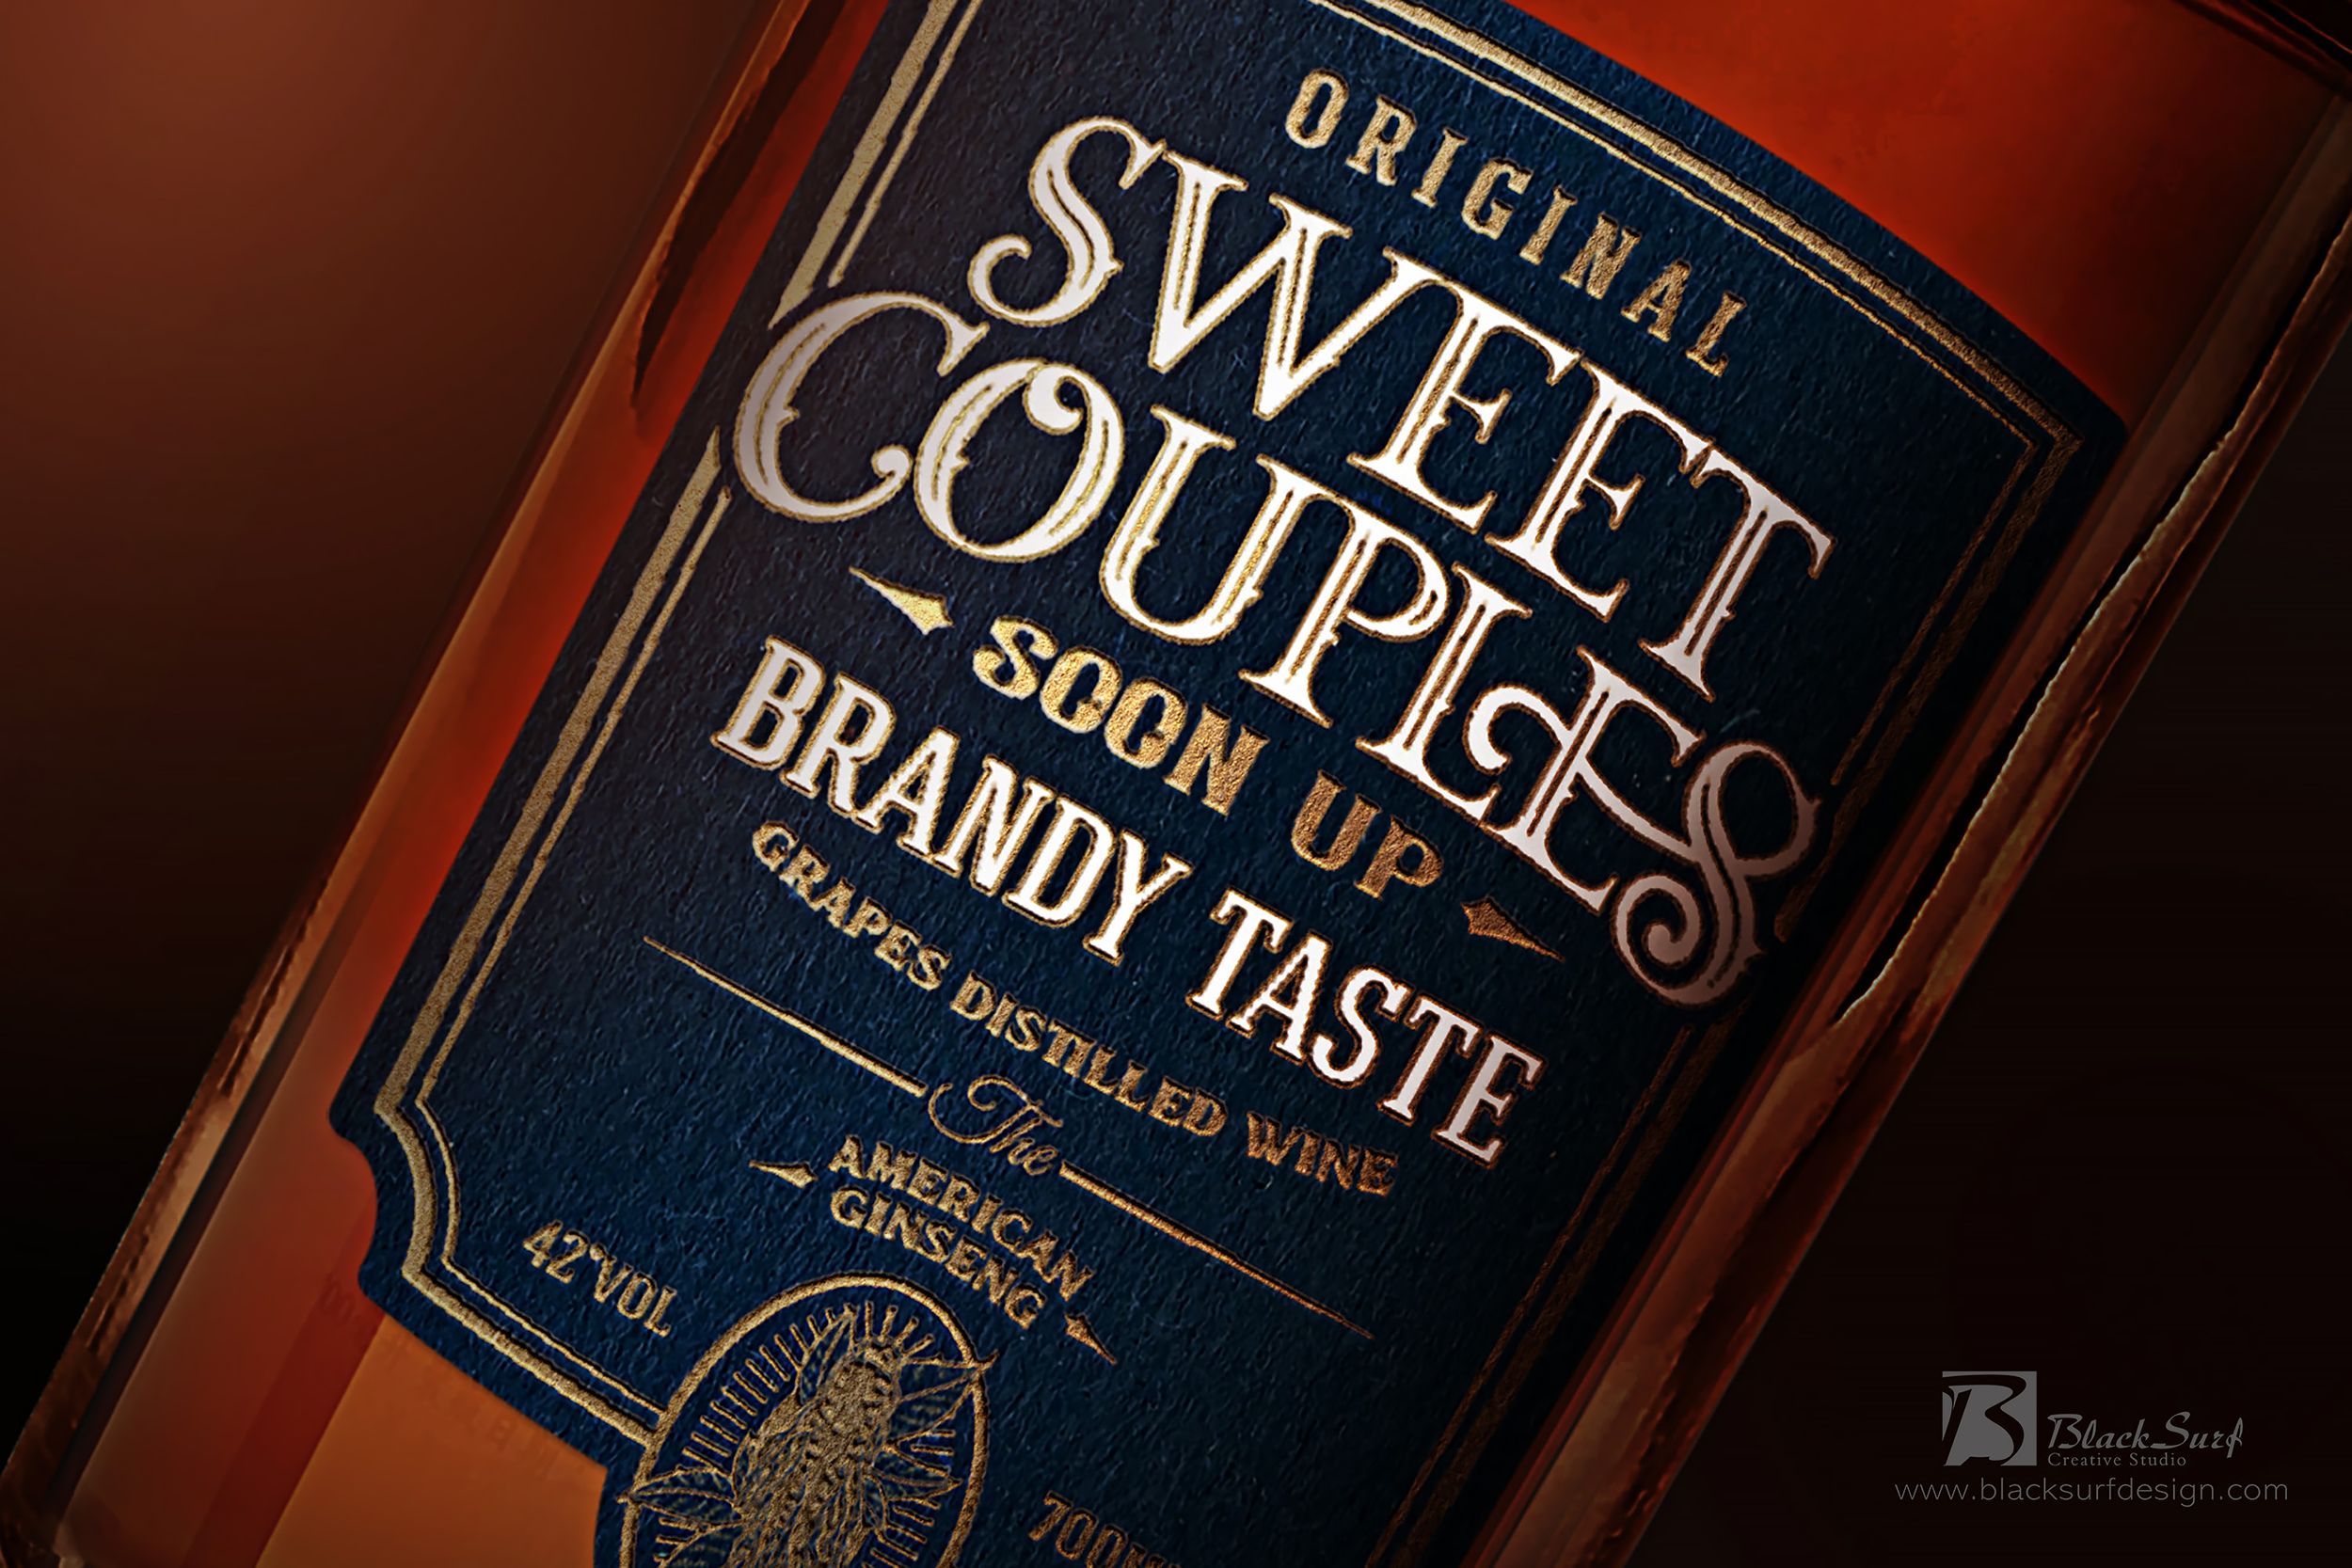 Sweet Couples酒品包裝特寫-台中包裝設計公司